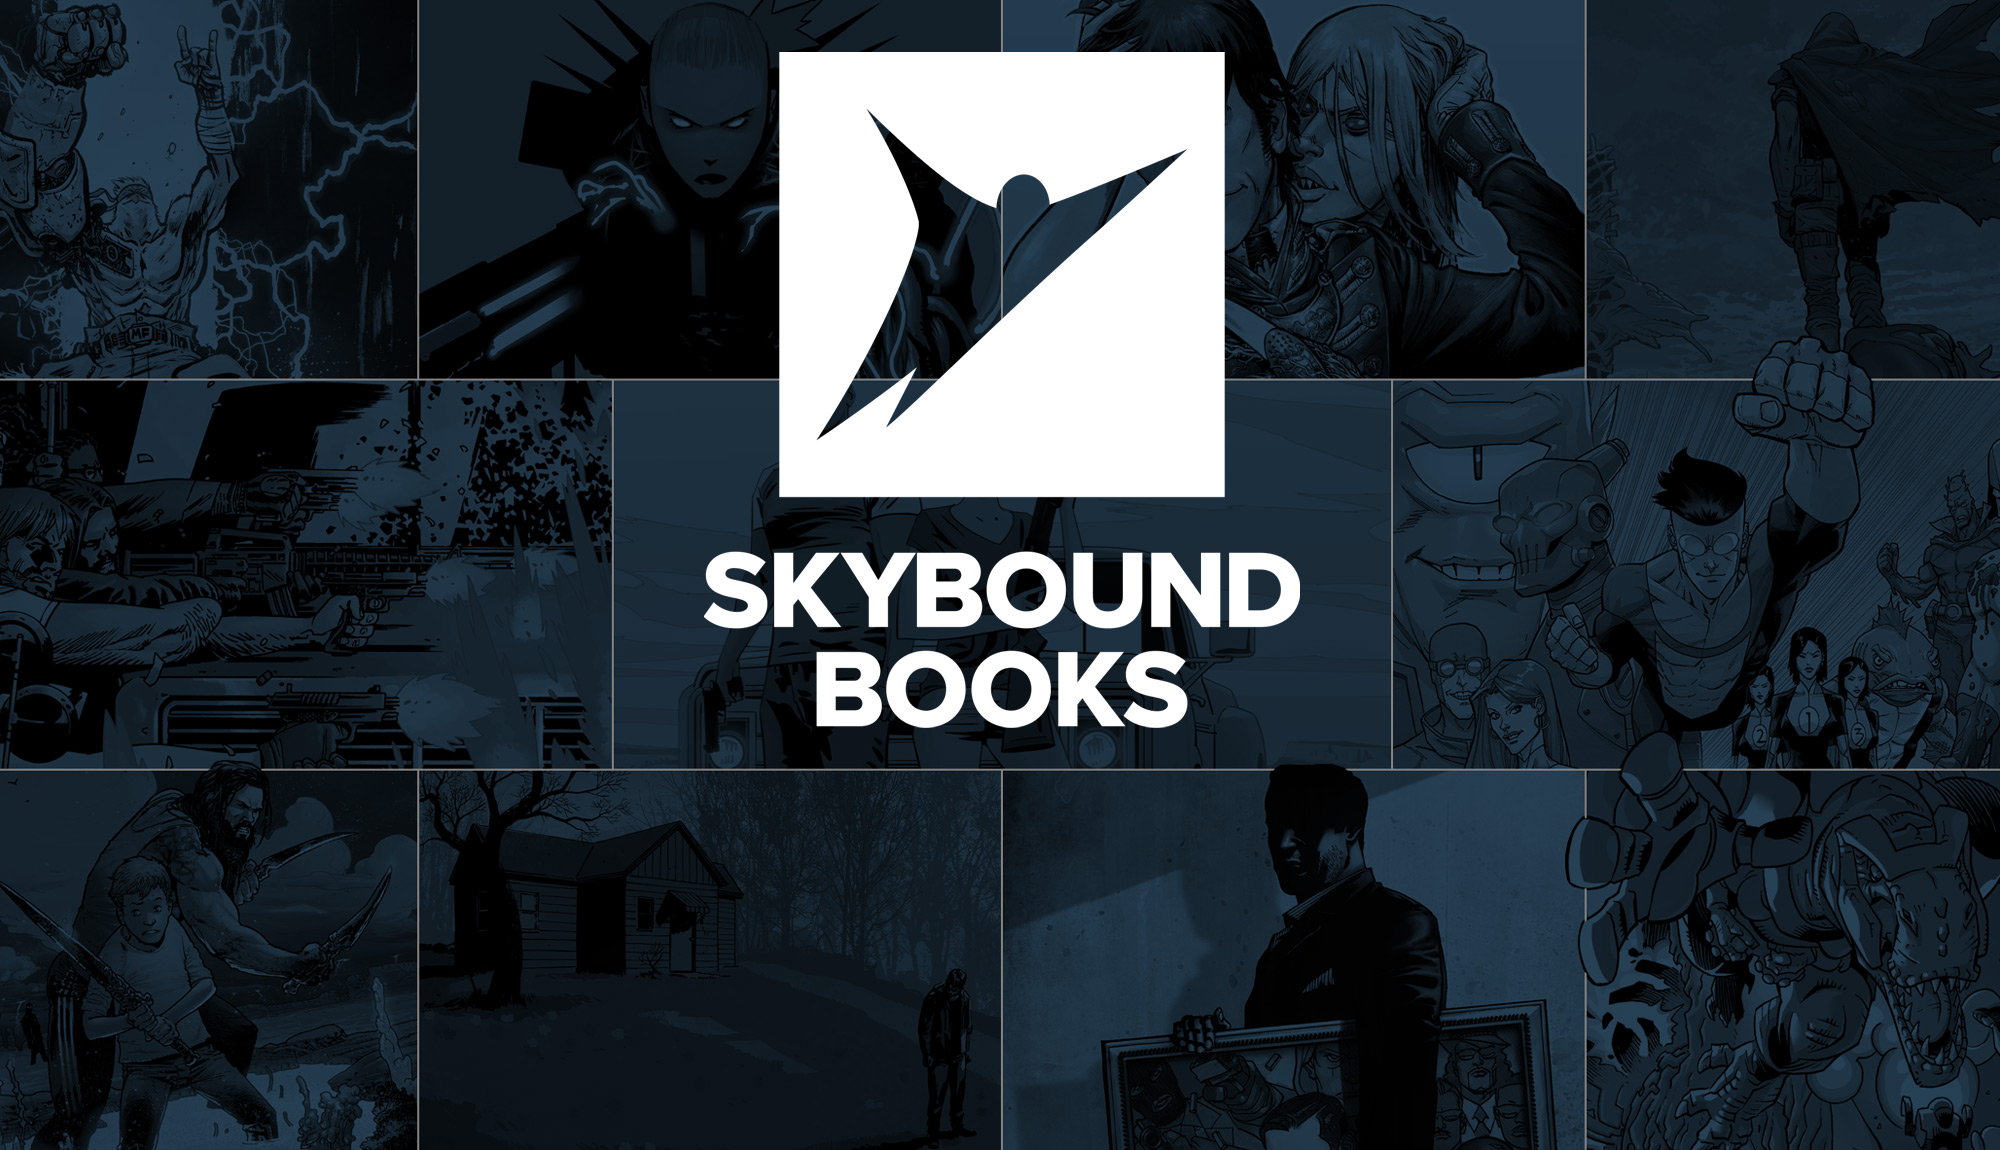 Skybound Books Announces New Titles through 2020!